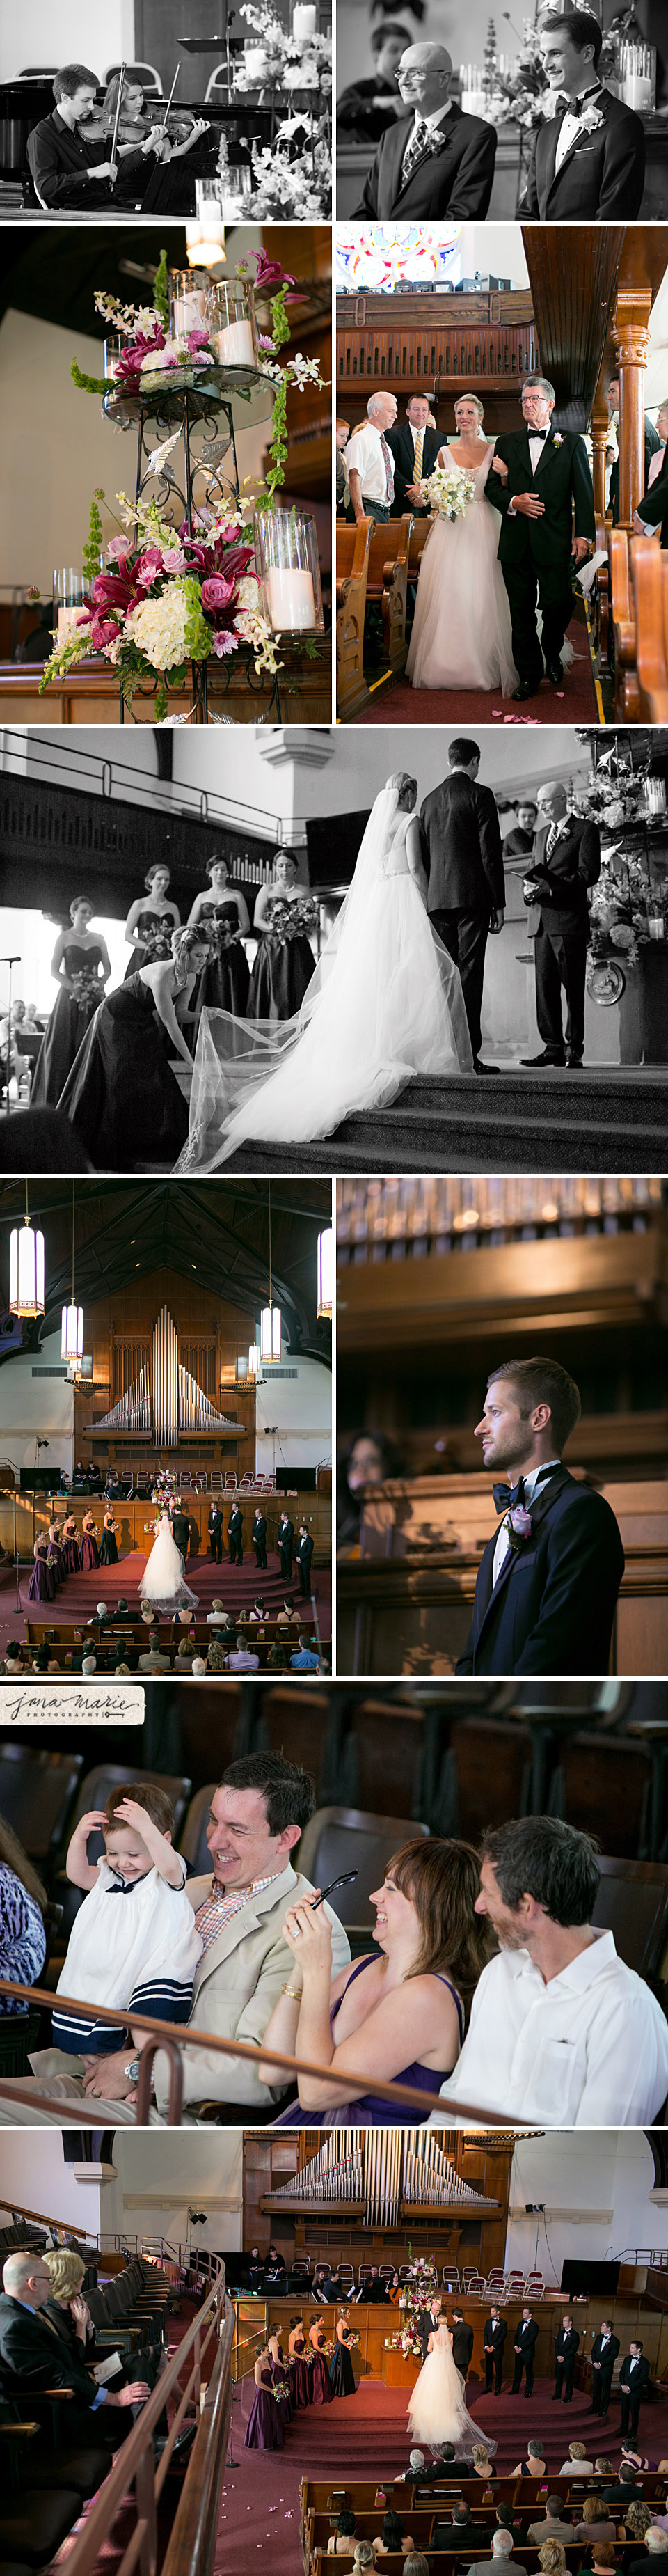 Jana Marie Photos, wedding day, ceremonies, church weddings, black and white images, best photos